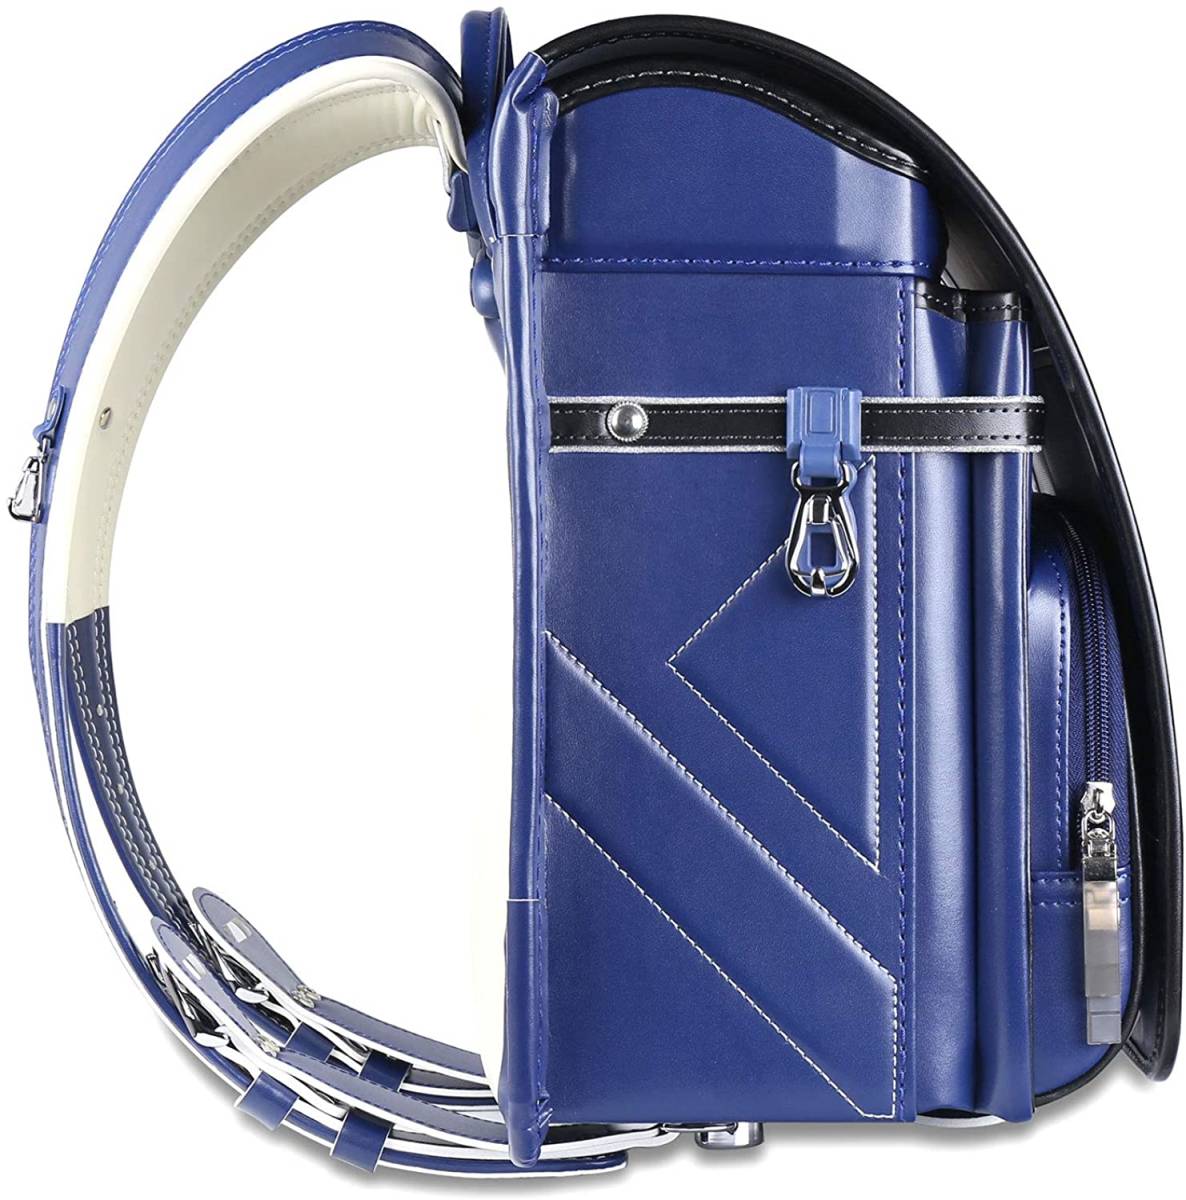  new goods newest model knapsack man A4 Flat file correspondence one touch lock navy blue blue black black 